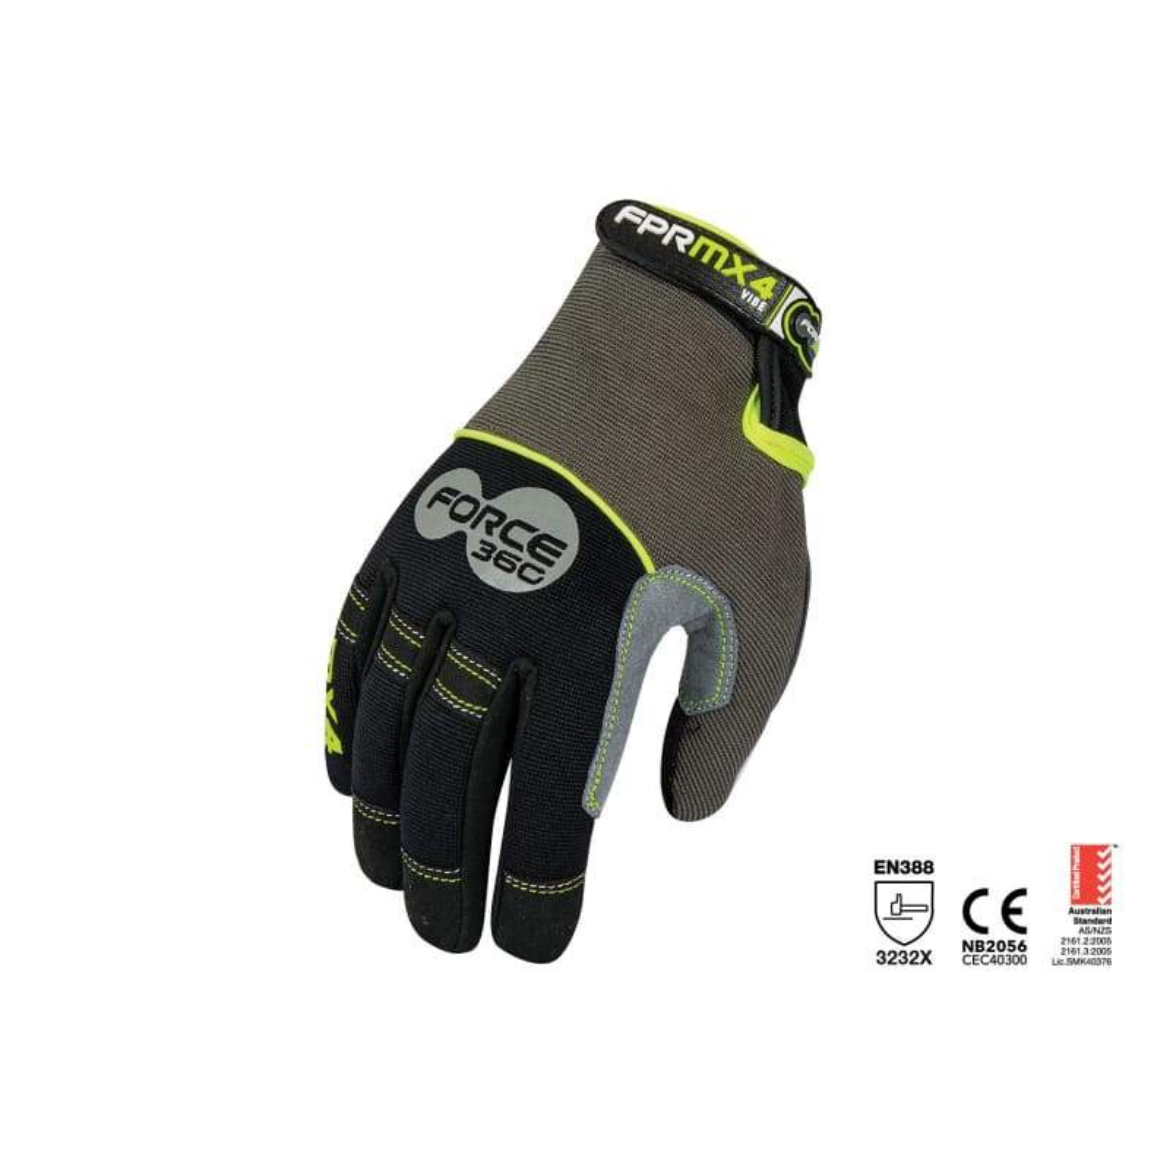 Picture of Force360 MX4 Vibe Control Mechanics Glove